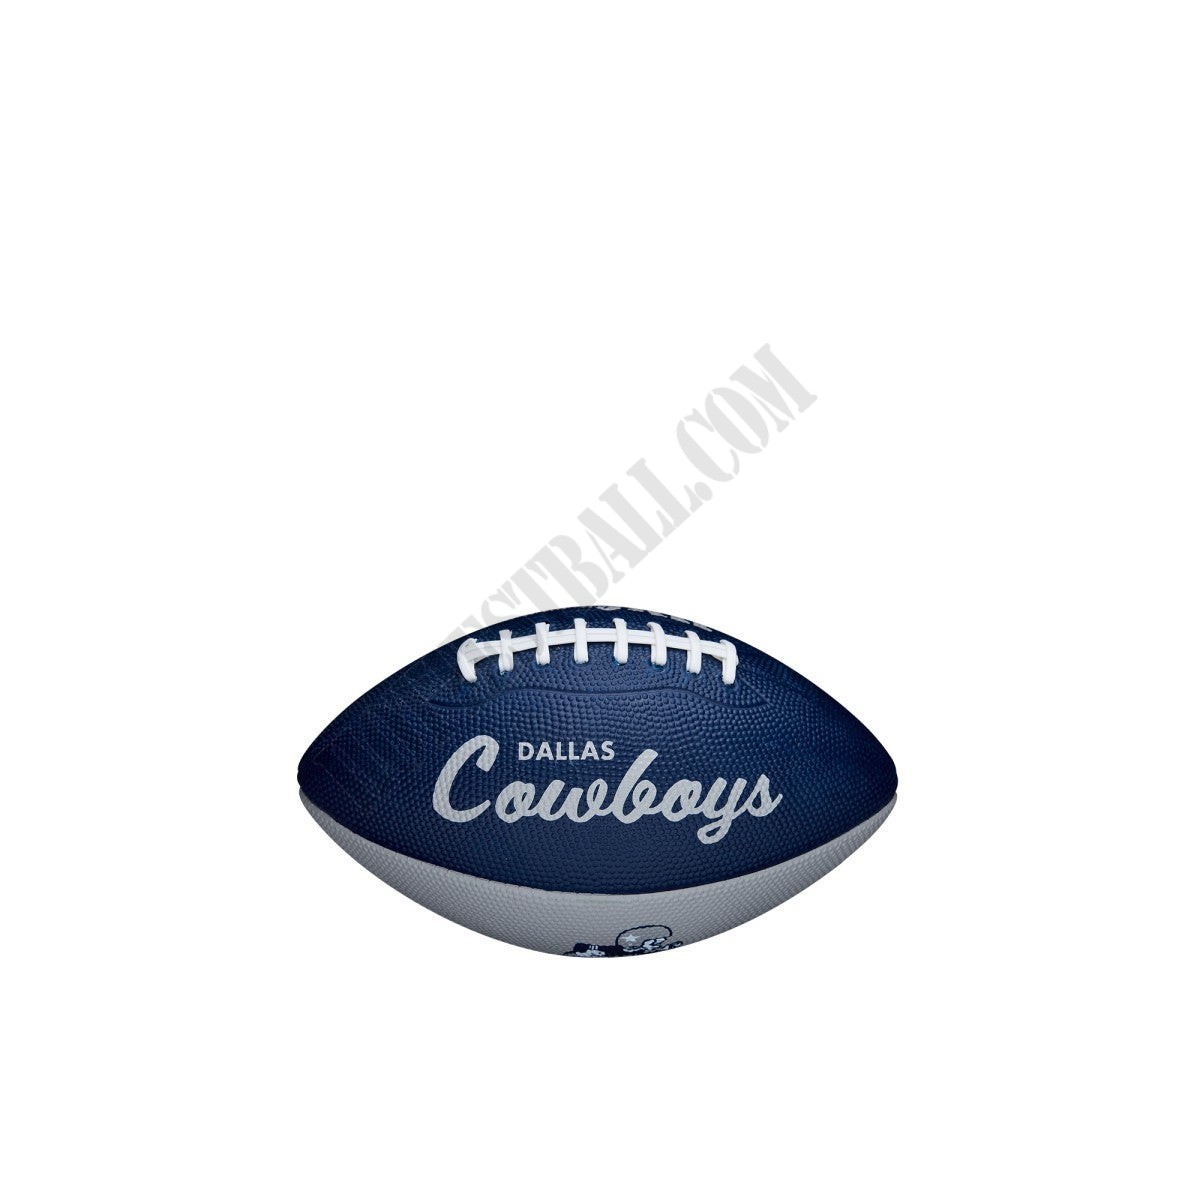 NFL Retro Mini Football - Dallas Cowboys ● Wilson Promotions - NFL Retro Mini Football - Dallas Cowboys ● Wilson Promotions